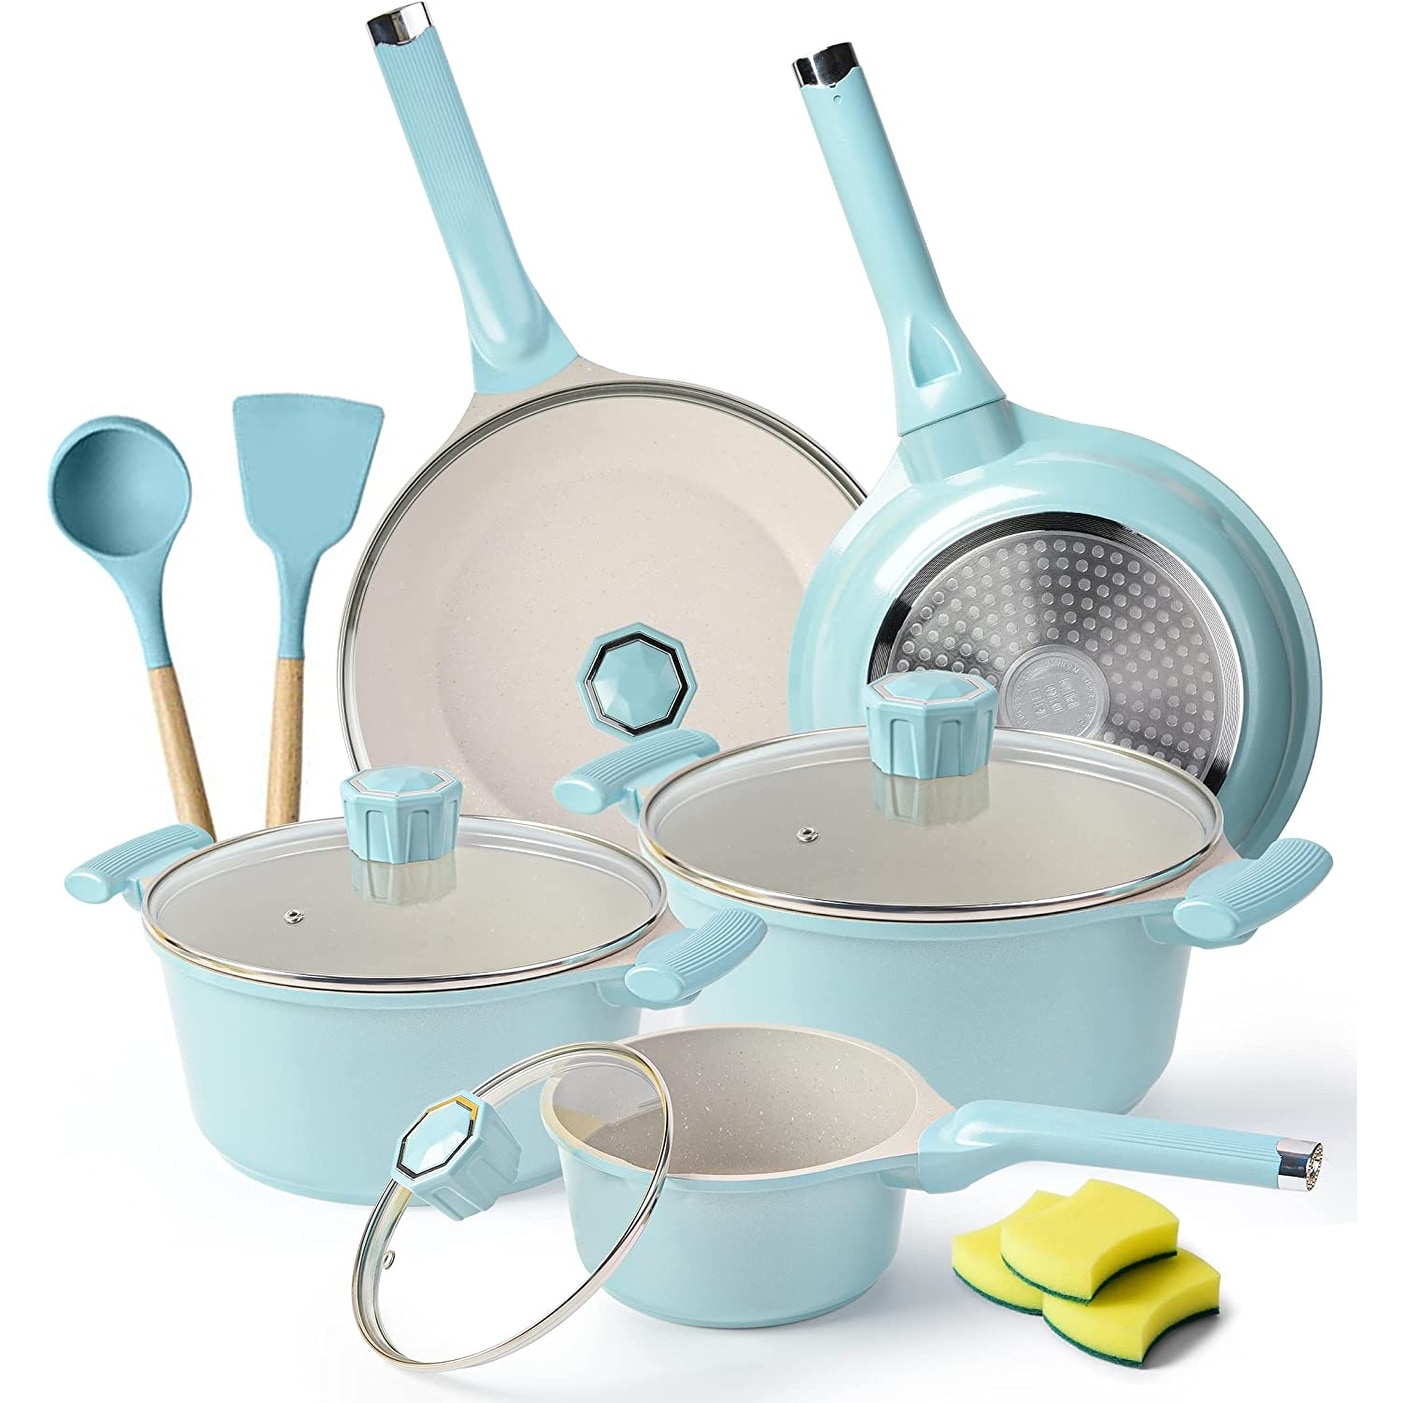 https://ak1.ostkcdn.com/images/products/is/images/direct/42e2fd6bf3ec46cb294ca1daace2262d767405b1/Nonstick-Pots-and-Pans-Set%2C-Beige-Granite-Induction-Kitchen-Cookware-Sets%2C-14-Piece-Non-Stick-Cooking-Set.jpg